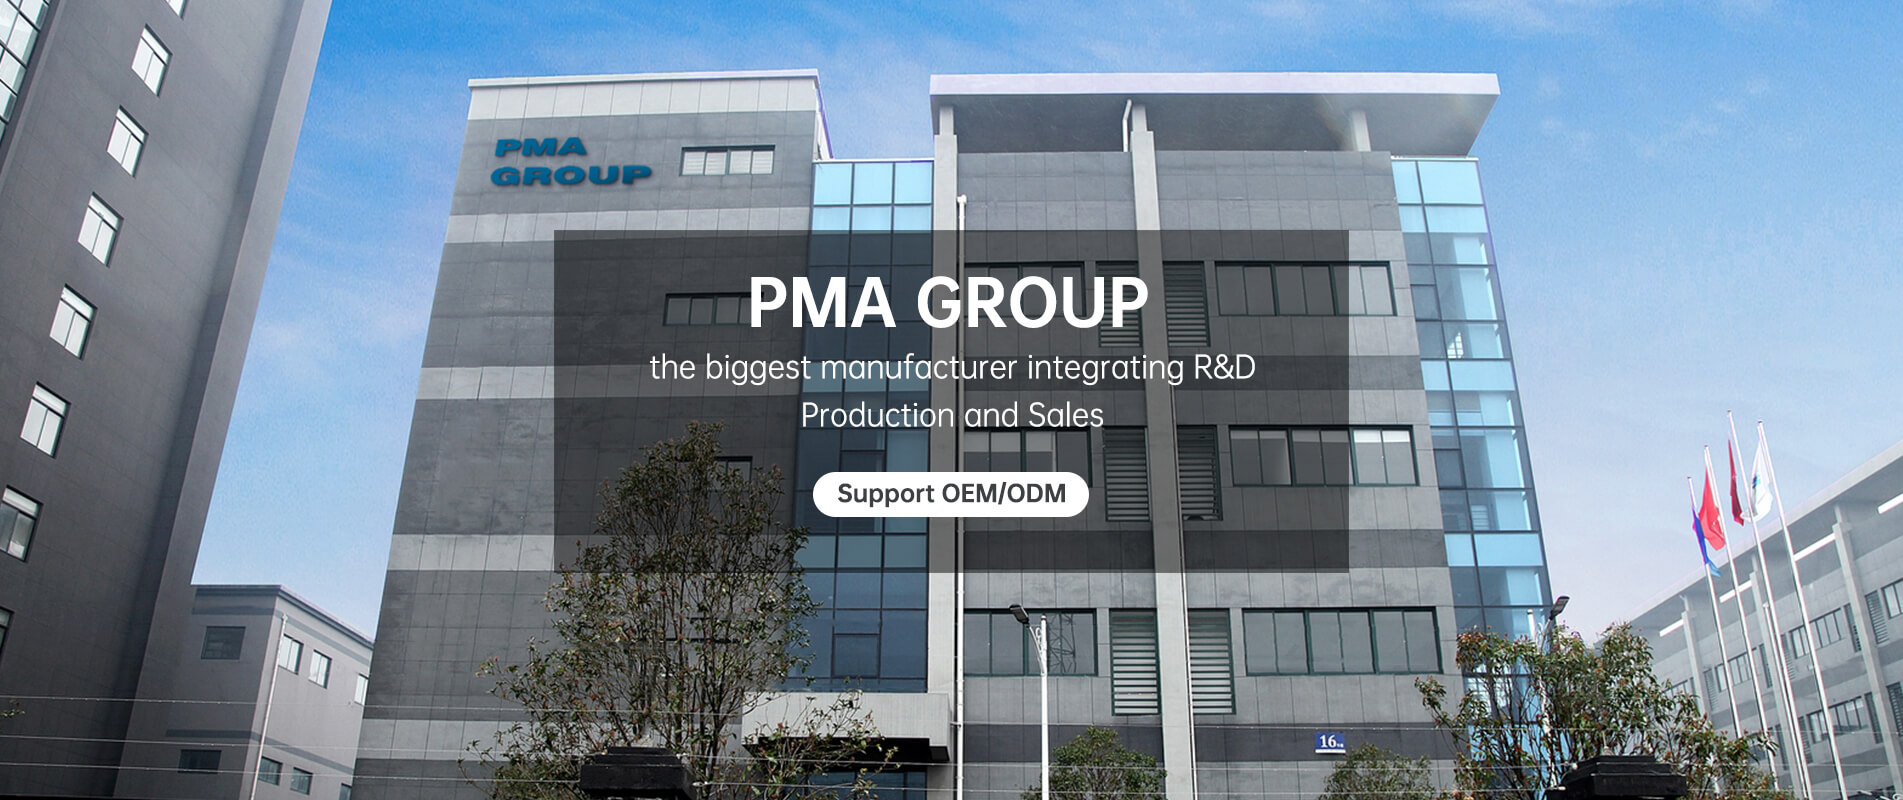 PMA Group Building